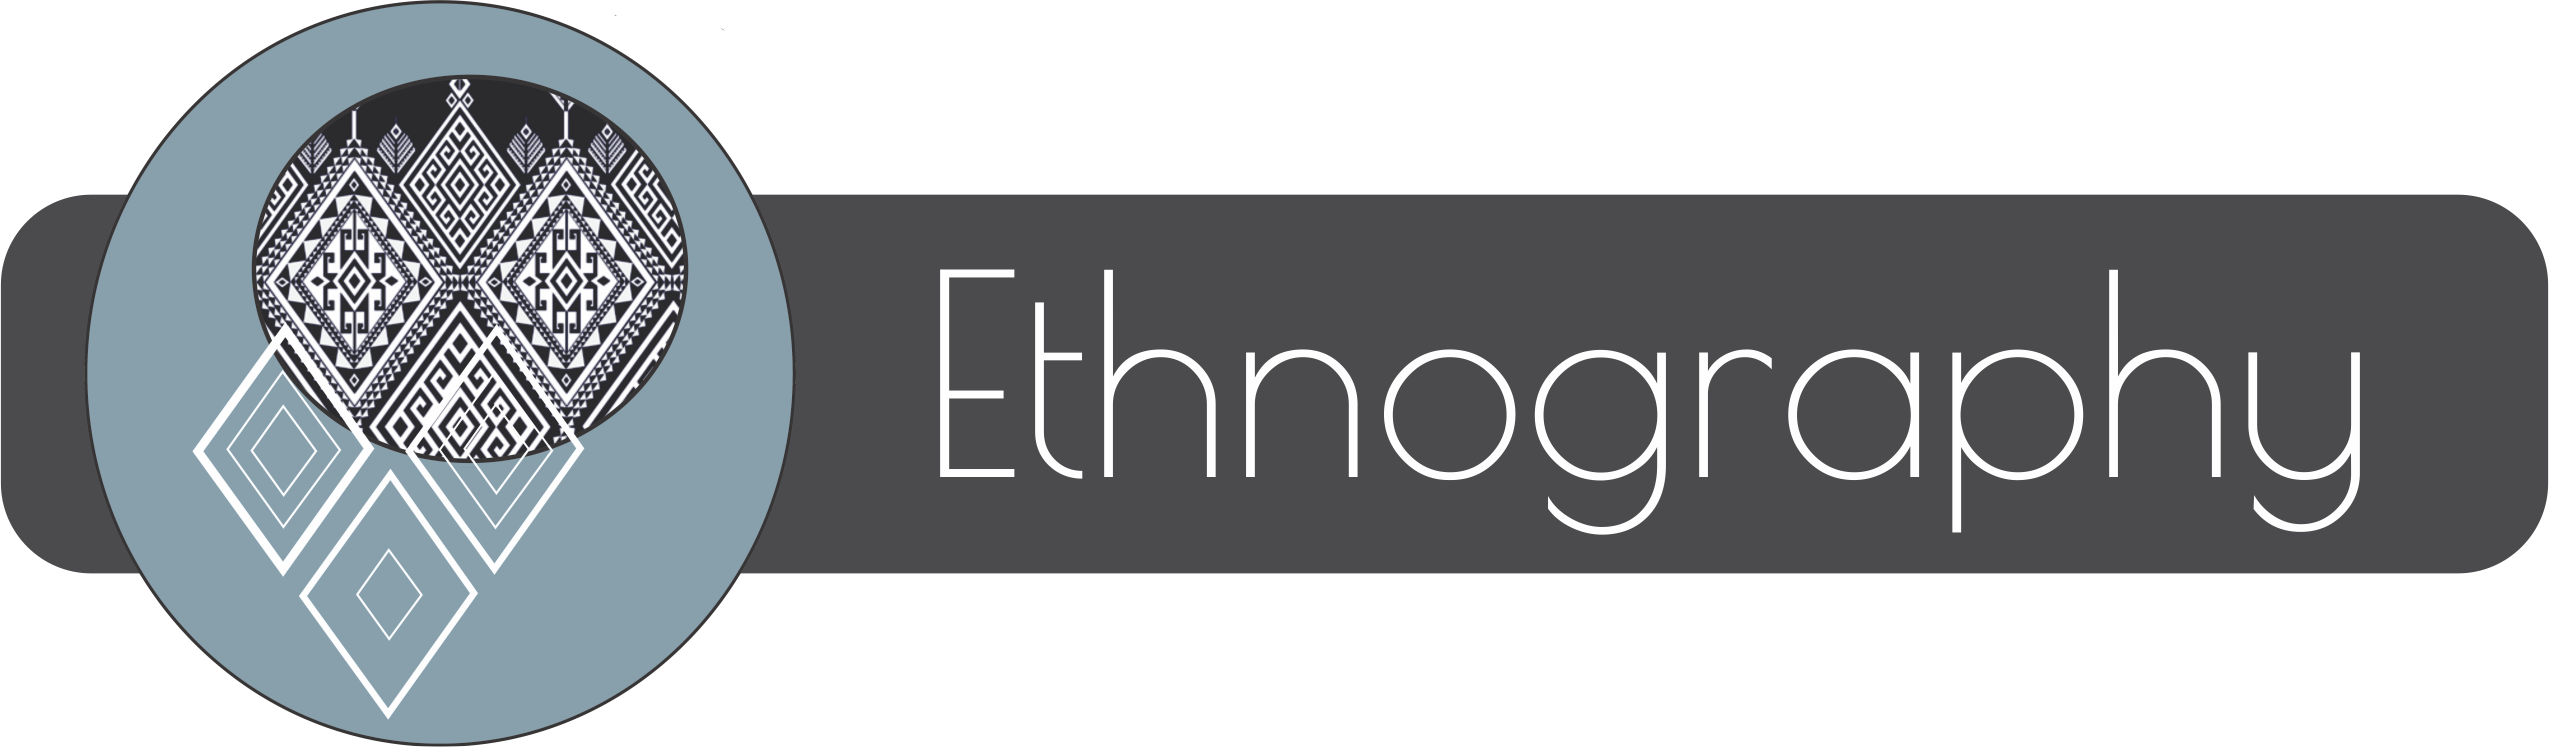 ethn logo